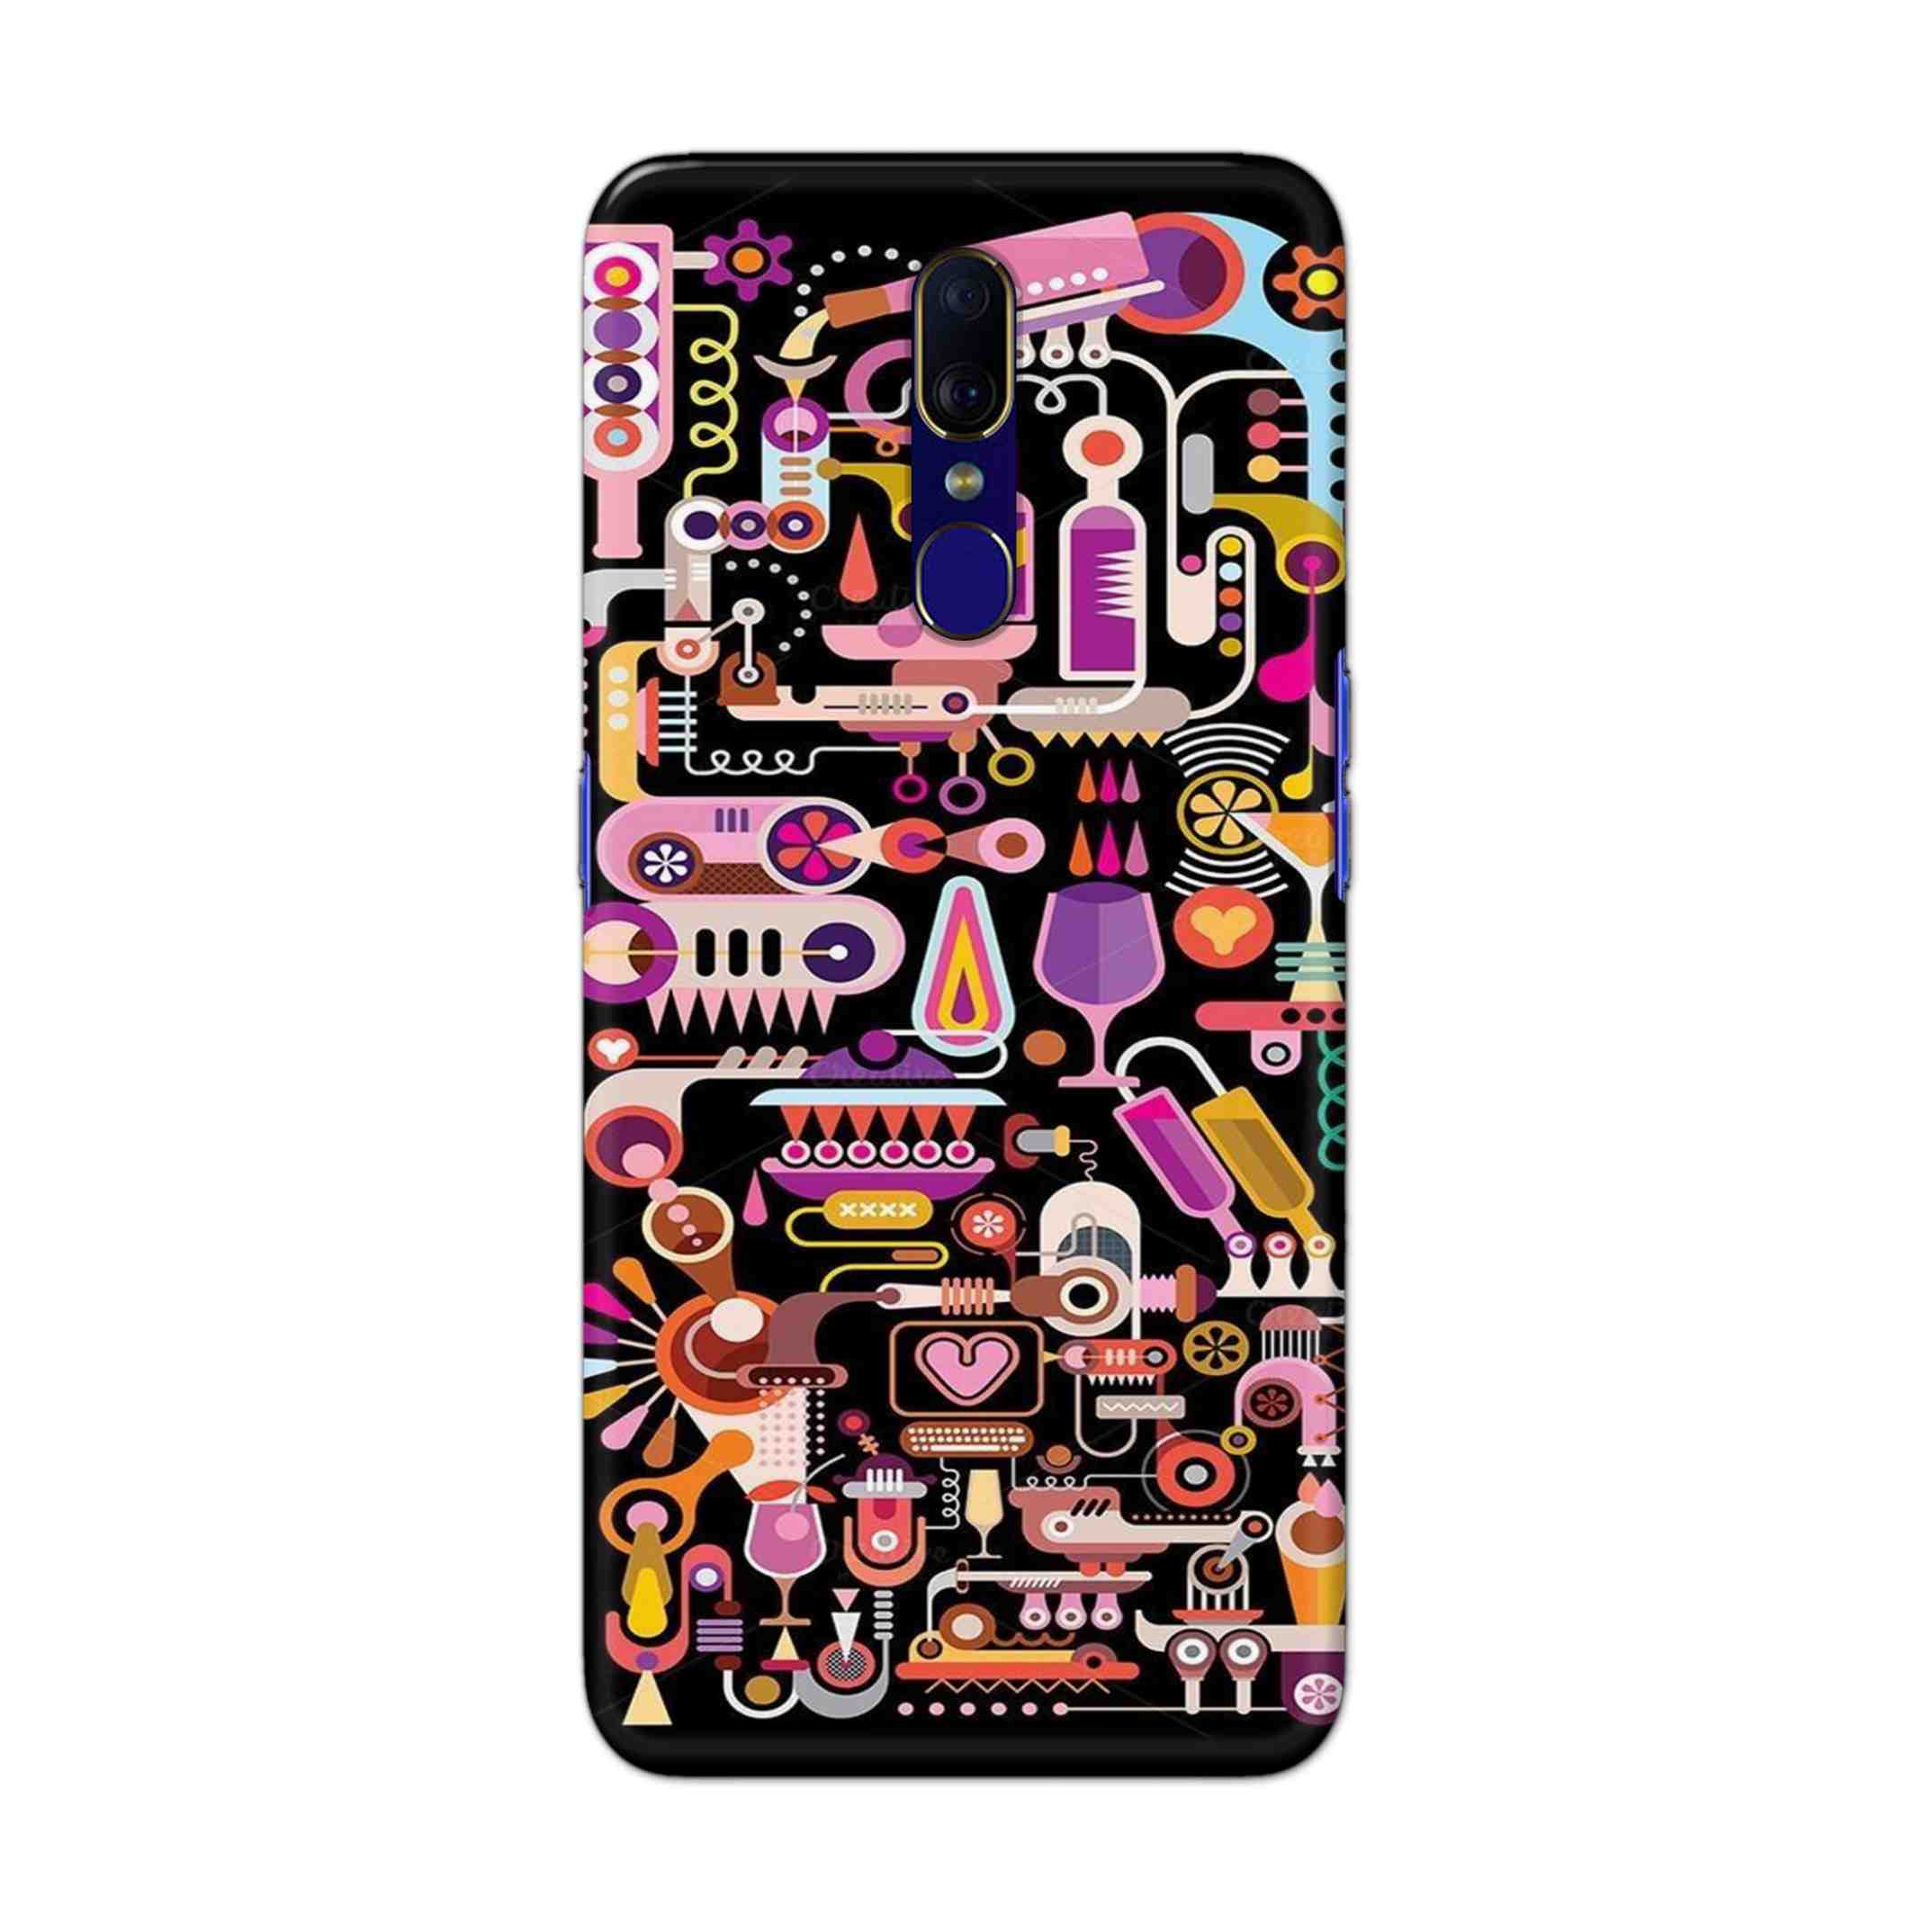 Buy Lab Art Hard Back Mobile Phone Case Cover For OPPO F11 Online